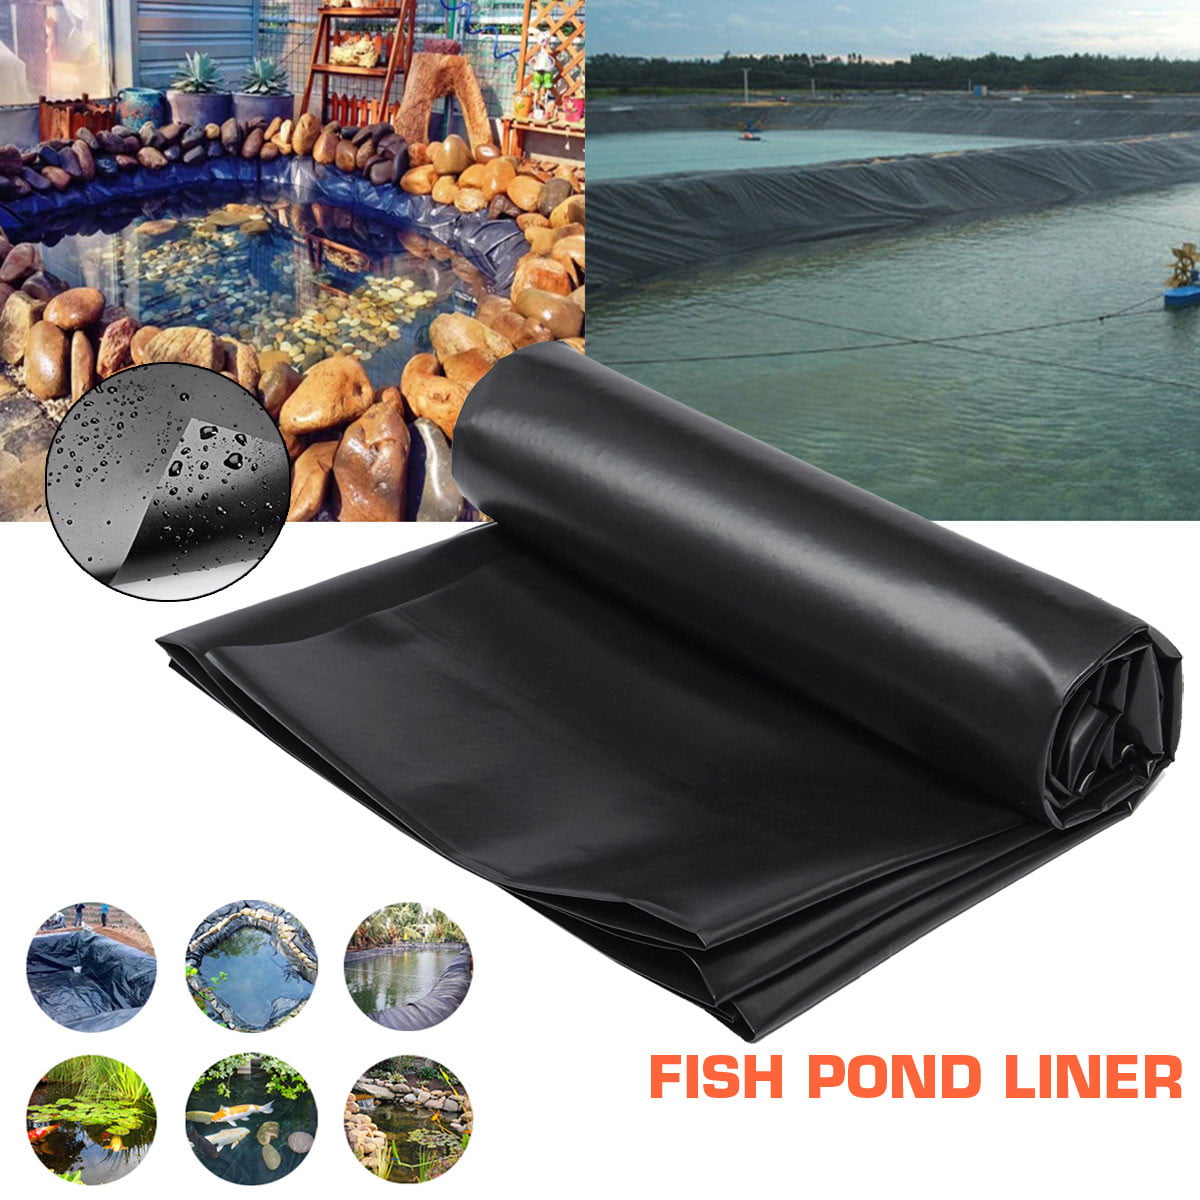 Details about   16 X 16ft Fish Pond Liner PVC Membrane Reinforced Gardens Pools Landscaping US 